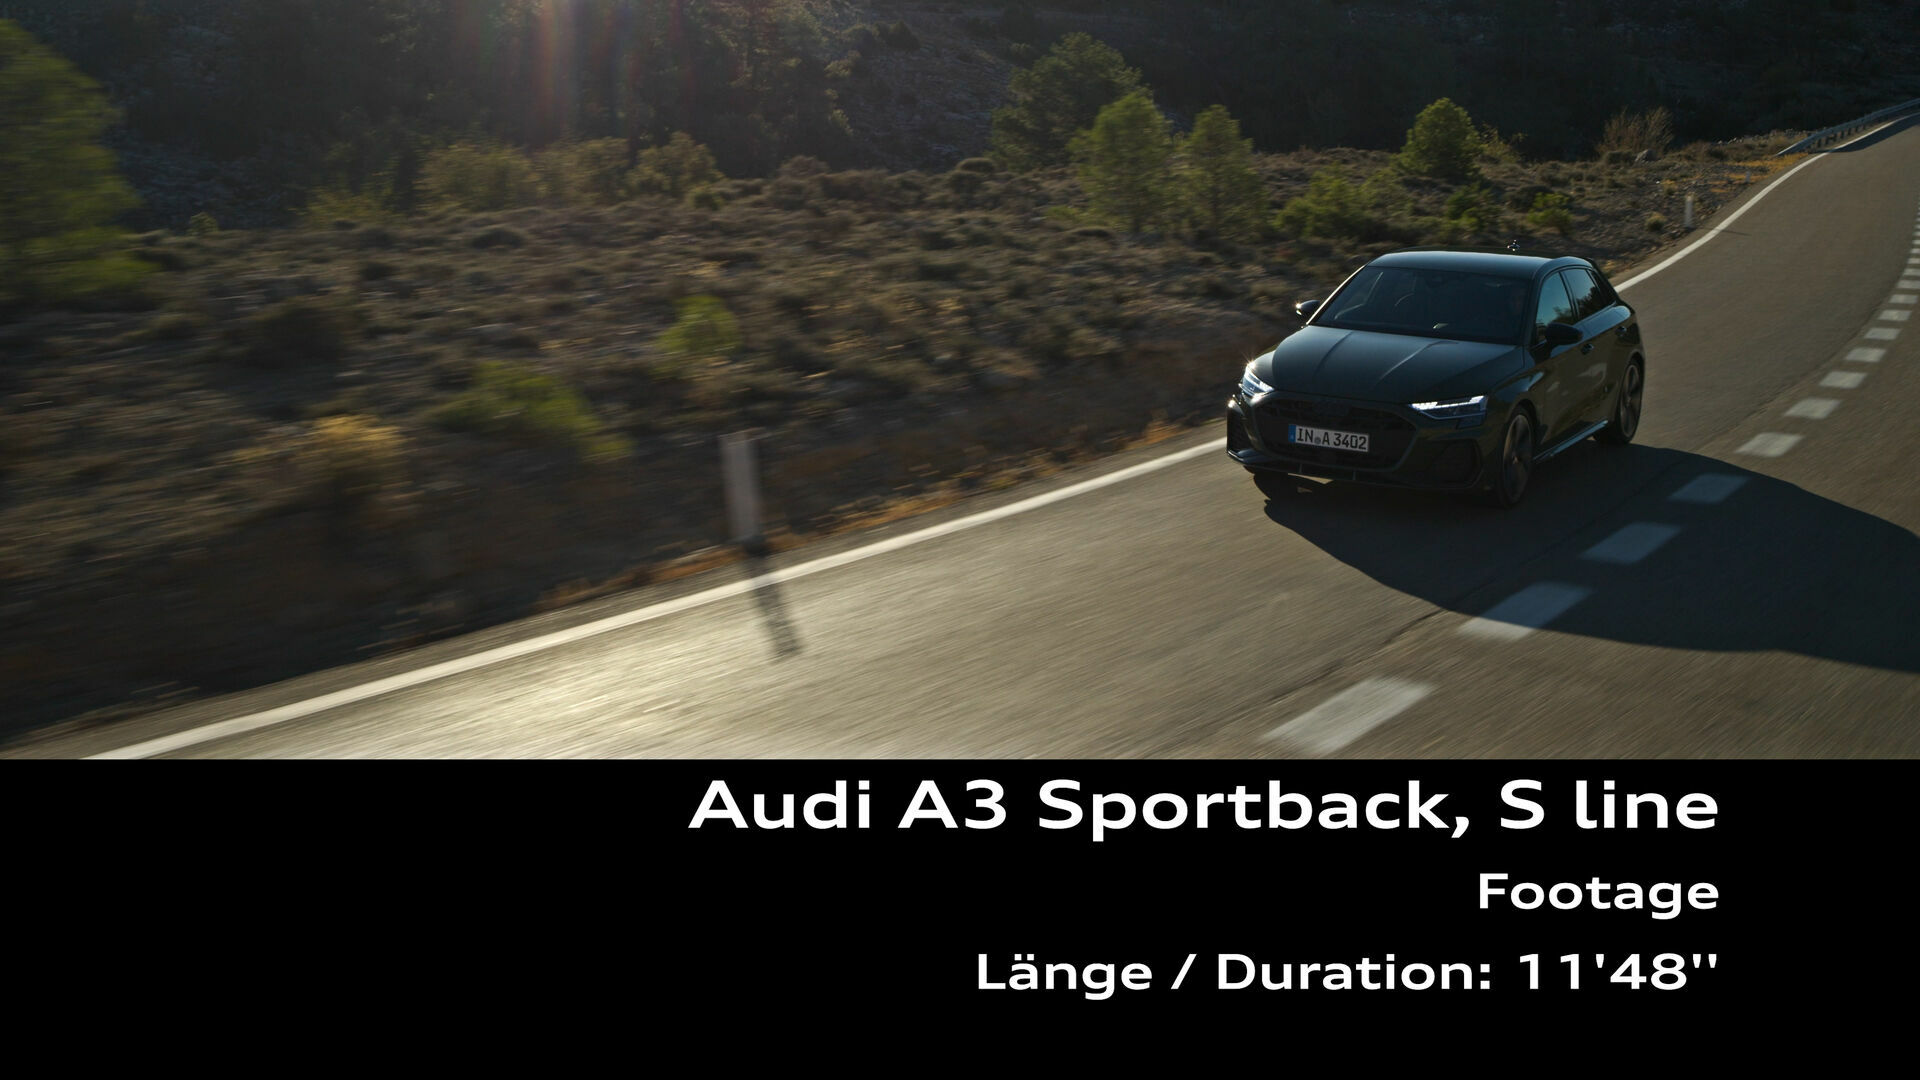 Audi A3 Sportback S line – Footage (dynamic)